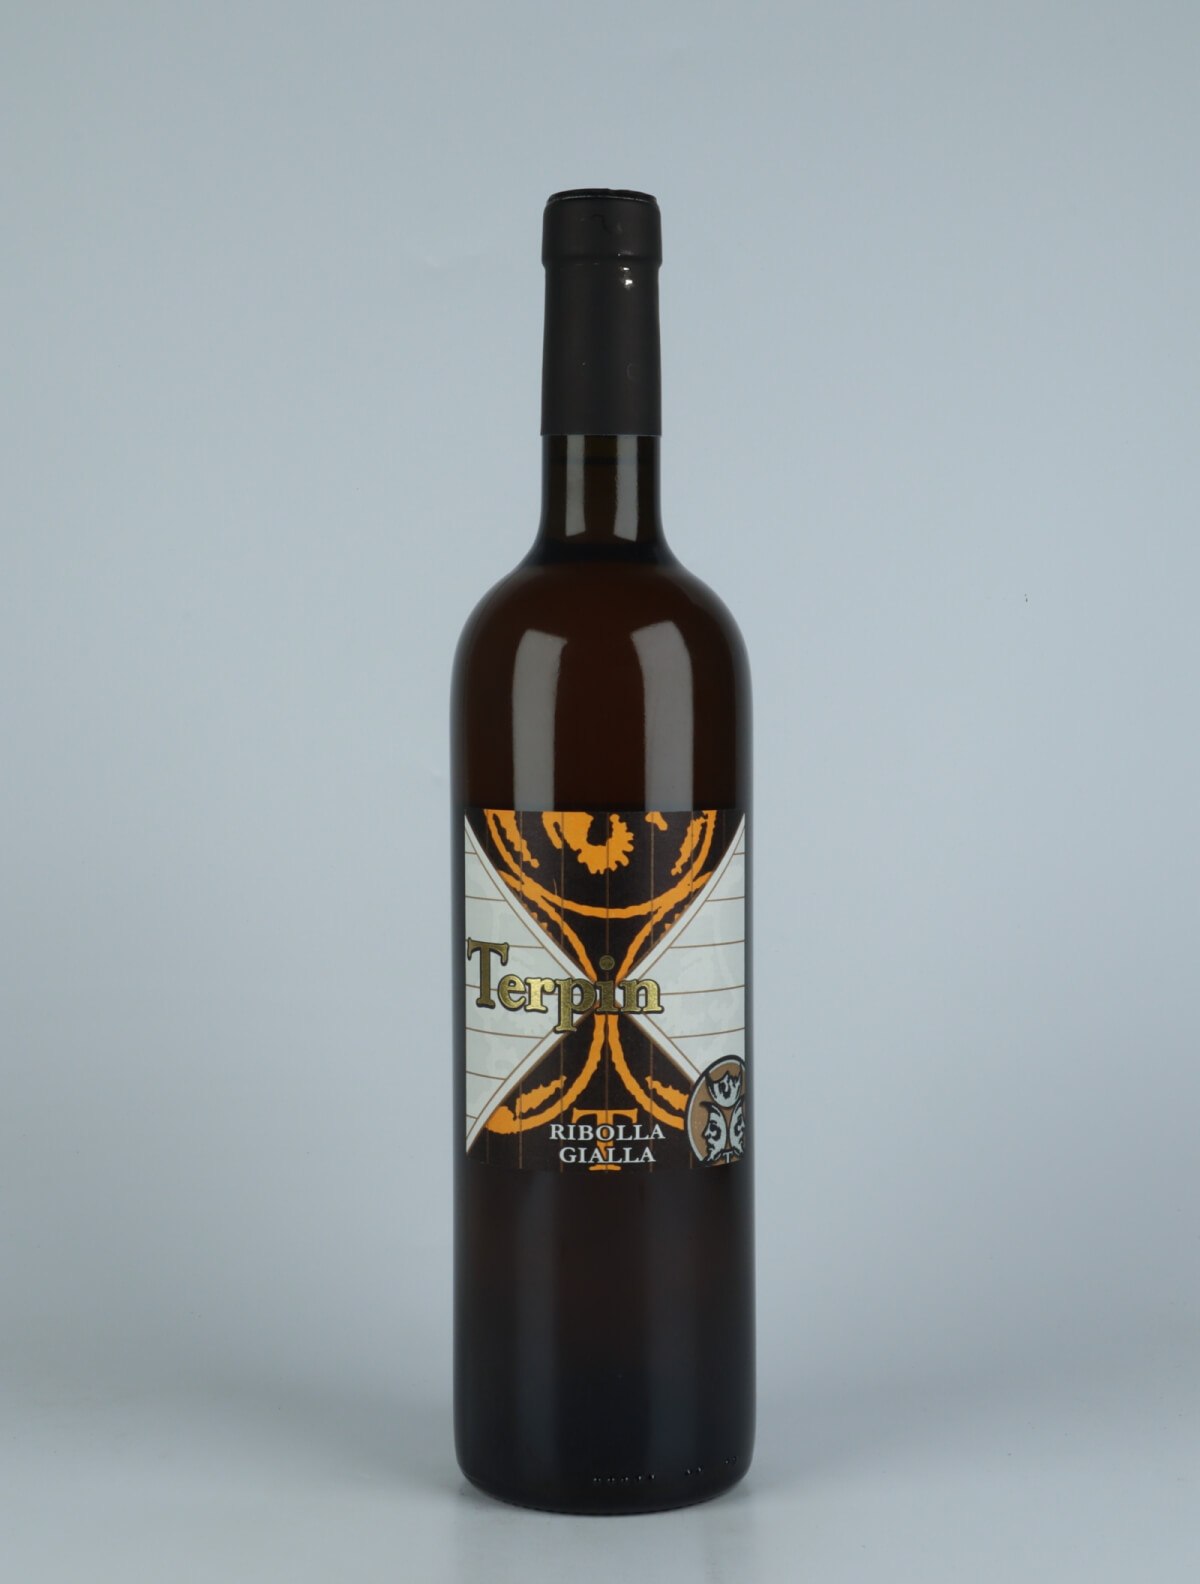 A bottle 2018 Ribolla Gialla Orange wine from Franco Terpin, Friuli in Italy